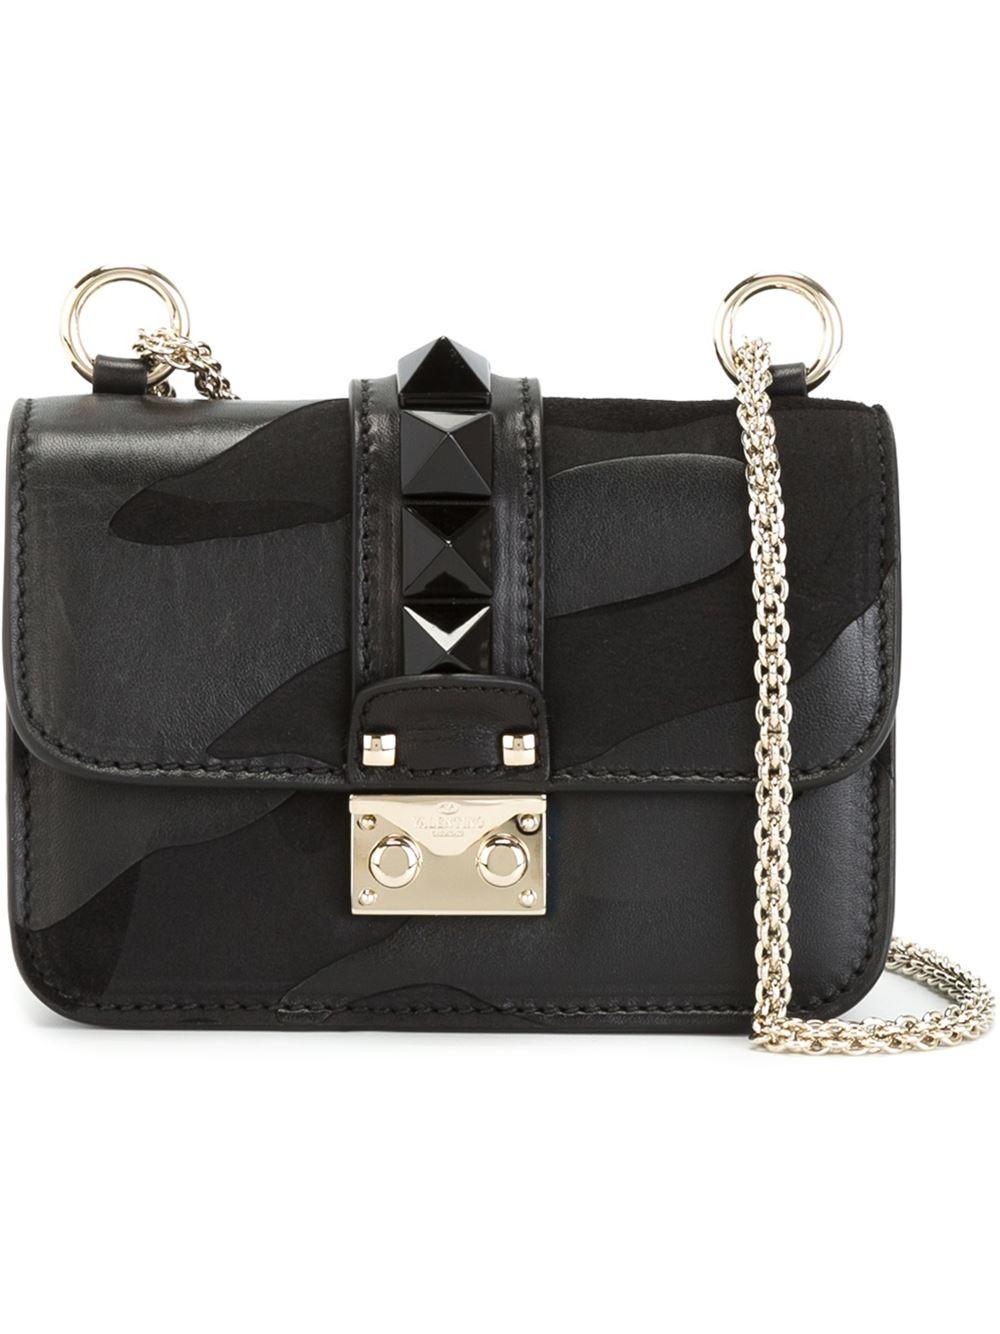 Valentino Leather 'glam Lock' Camouflage Shoulder Bag in Black - Lyst